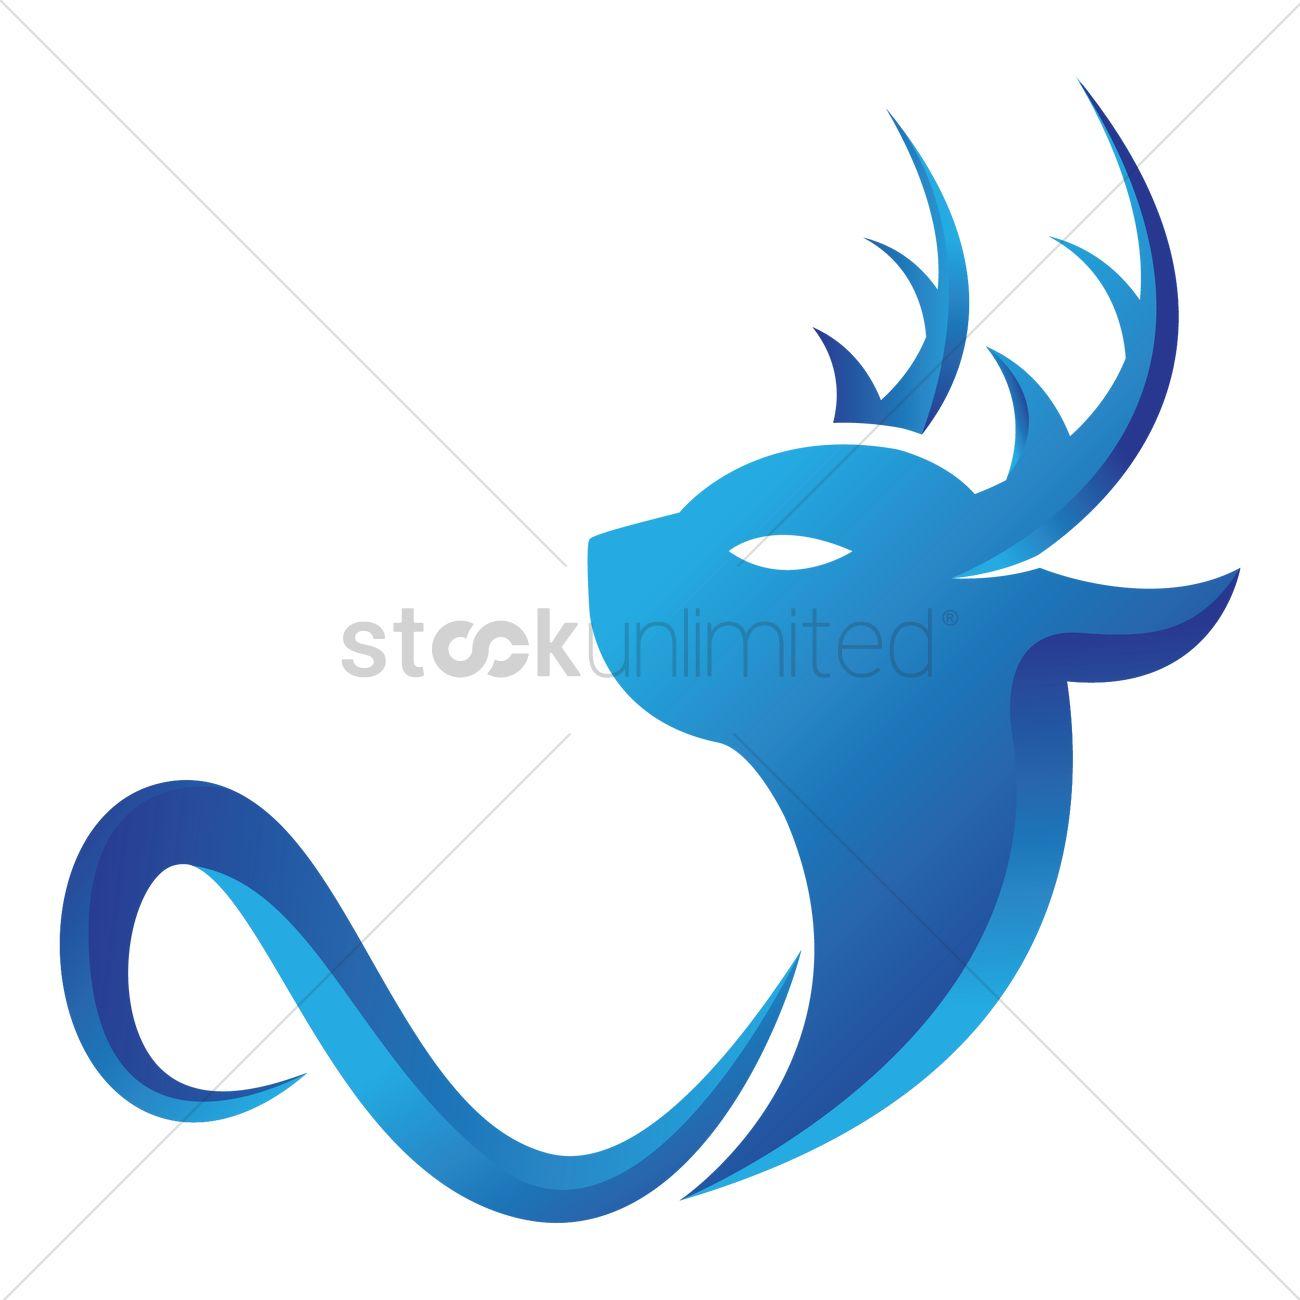 Abstract Animal Logo - Abstract logo Vector Image - 1624557 | StockUnlimited